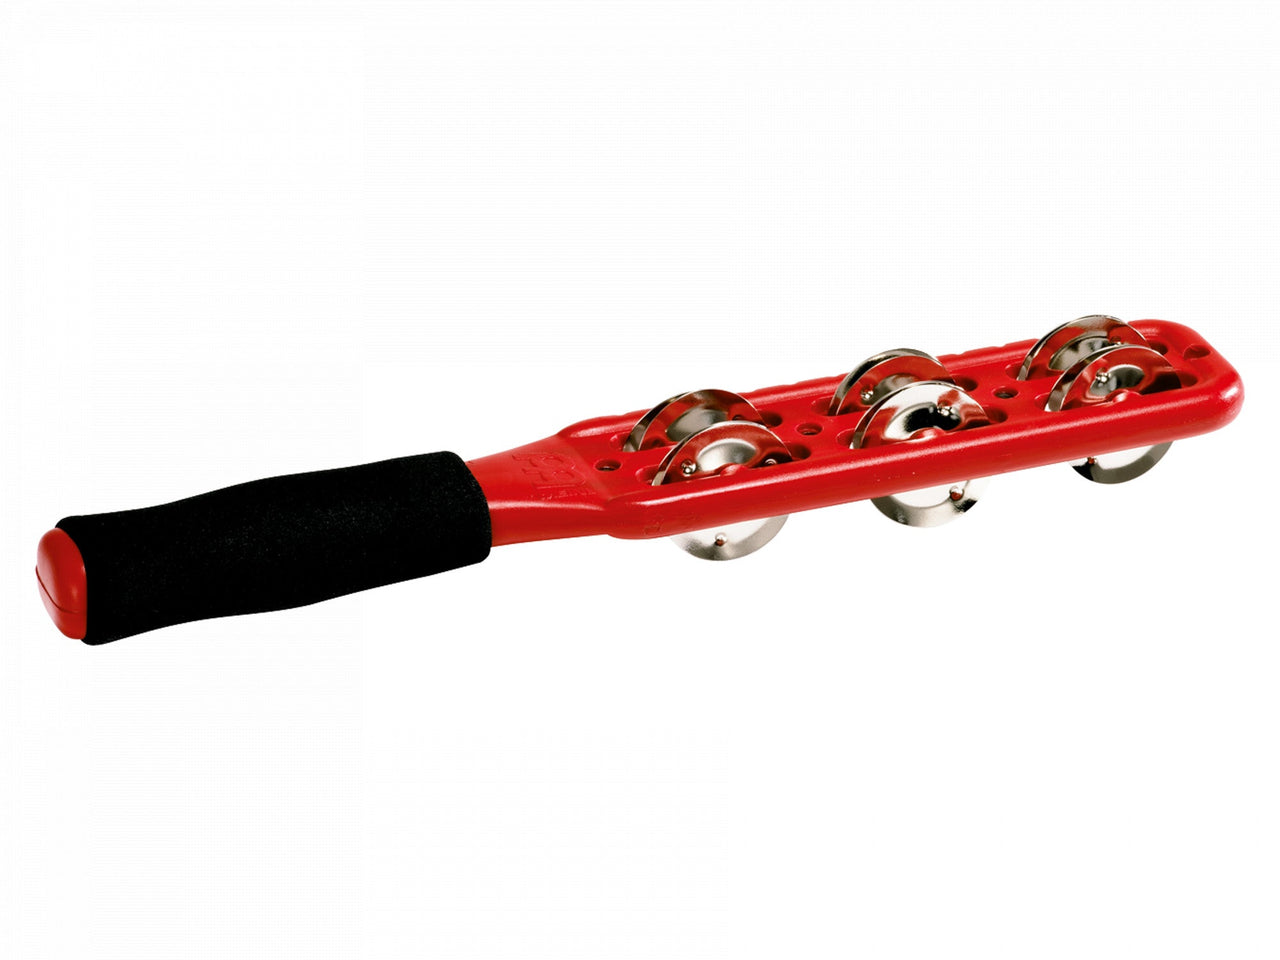 Meinl Professional Series Jingle Stick, Red (JG1R) Percussion Meinl 